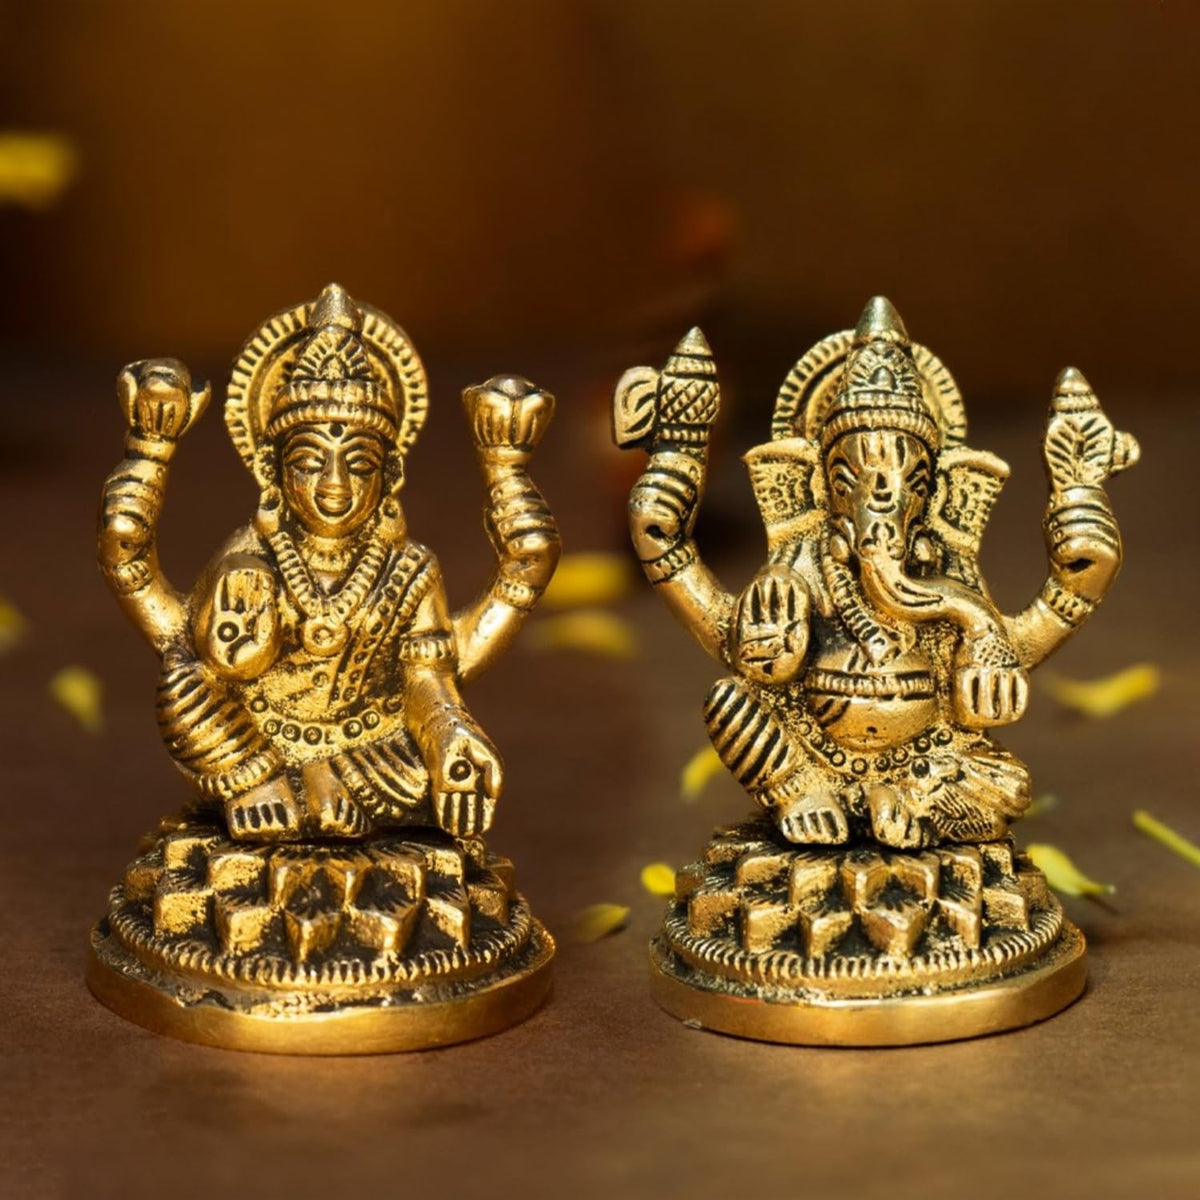 Ekhasa 100% Pure Brass Ganesh Lakshmi Idol | Pital Ganesha and Laxmi Murti for Pooja Room, Home Decor, Office Desk and Car Dashboard | Vinayagar Laxmi Statue for Diwali Puja (Combo Set)